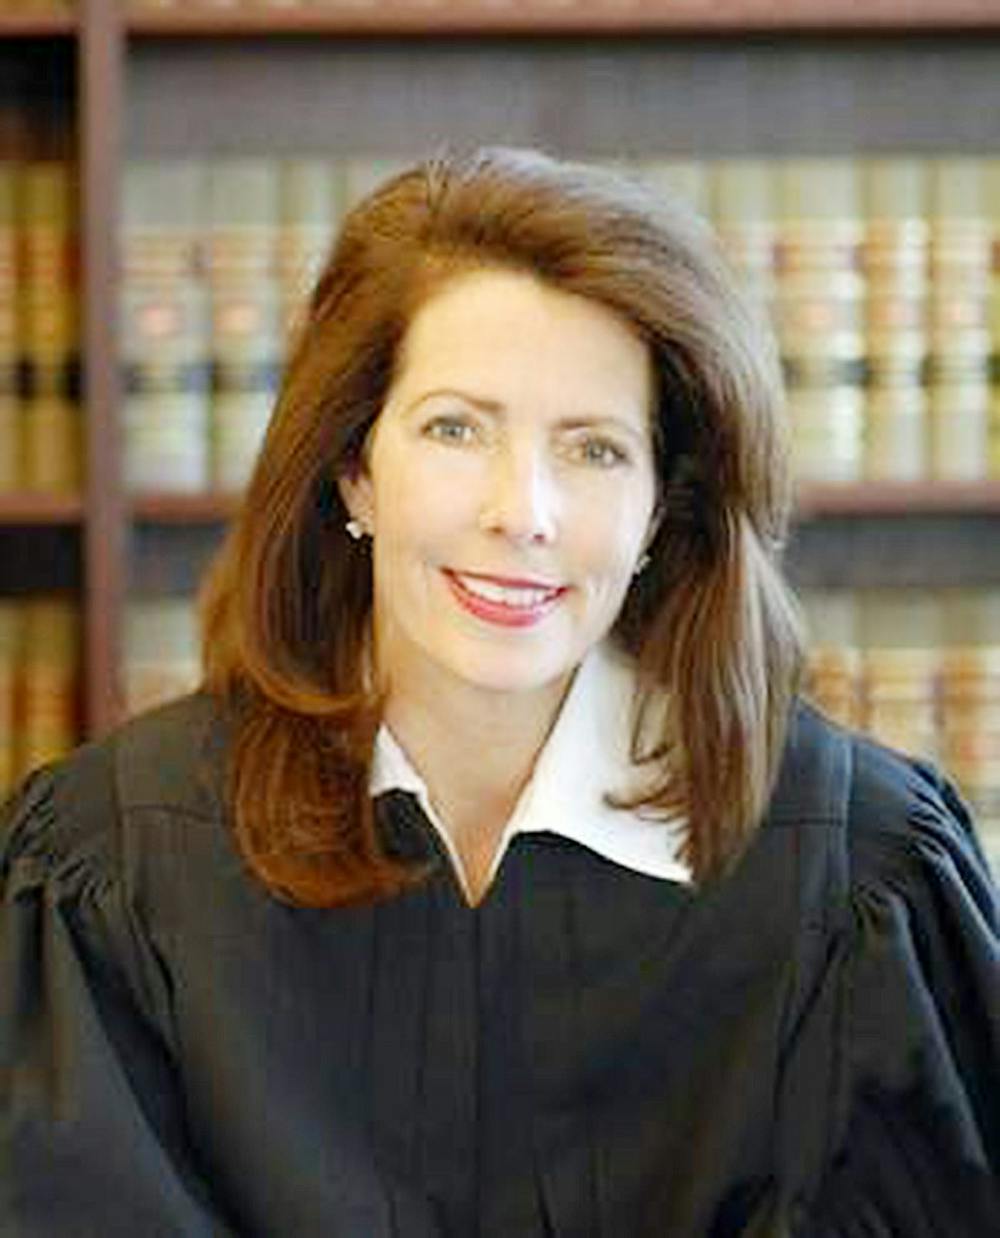 Justice Hathaway announces retirement due to complaint